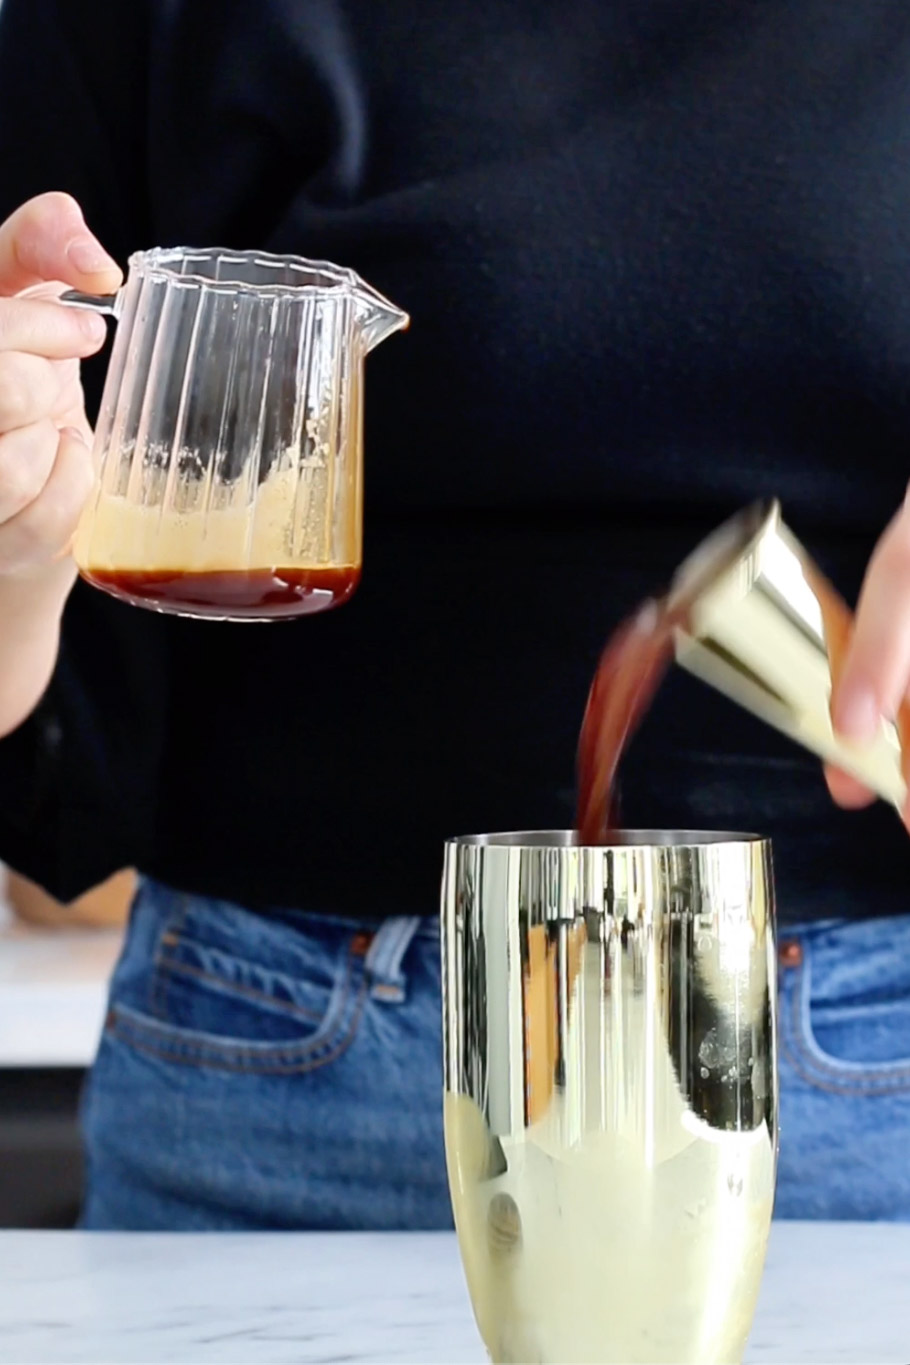 A woman carefully pouring shakeado liquid into a gold cup.